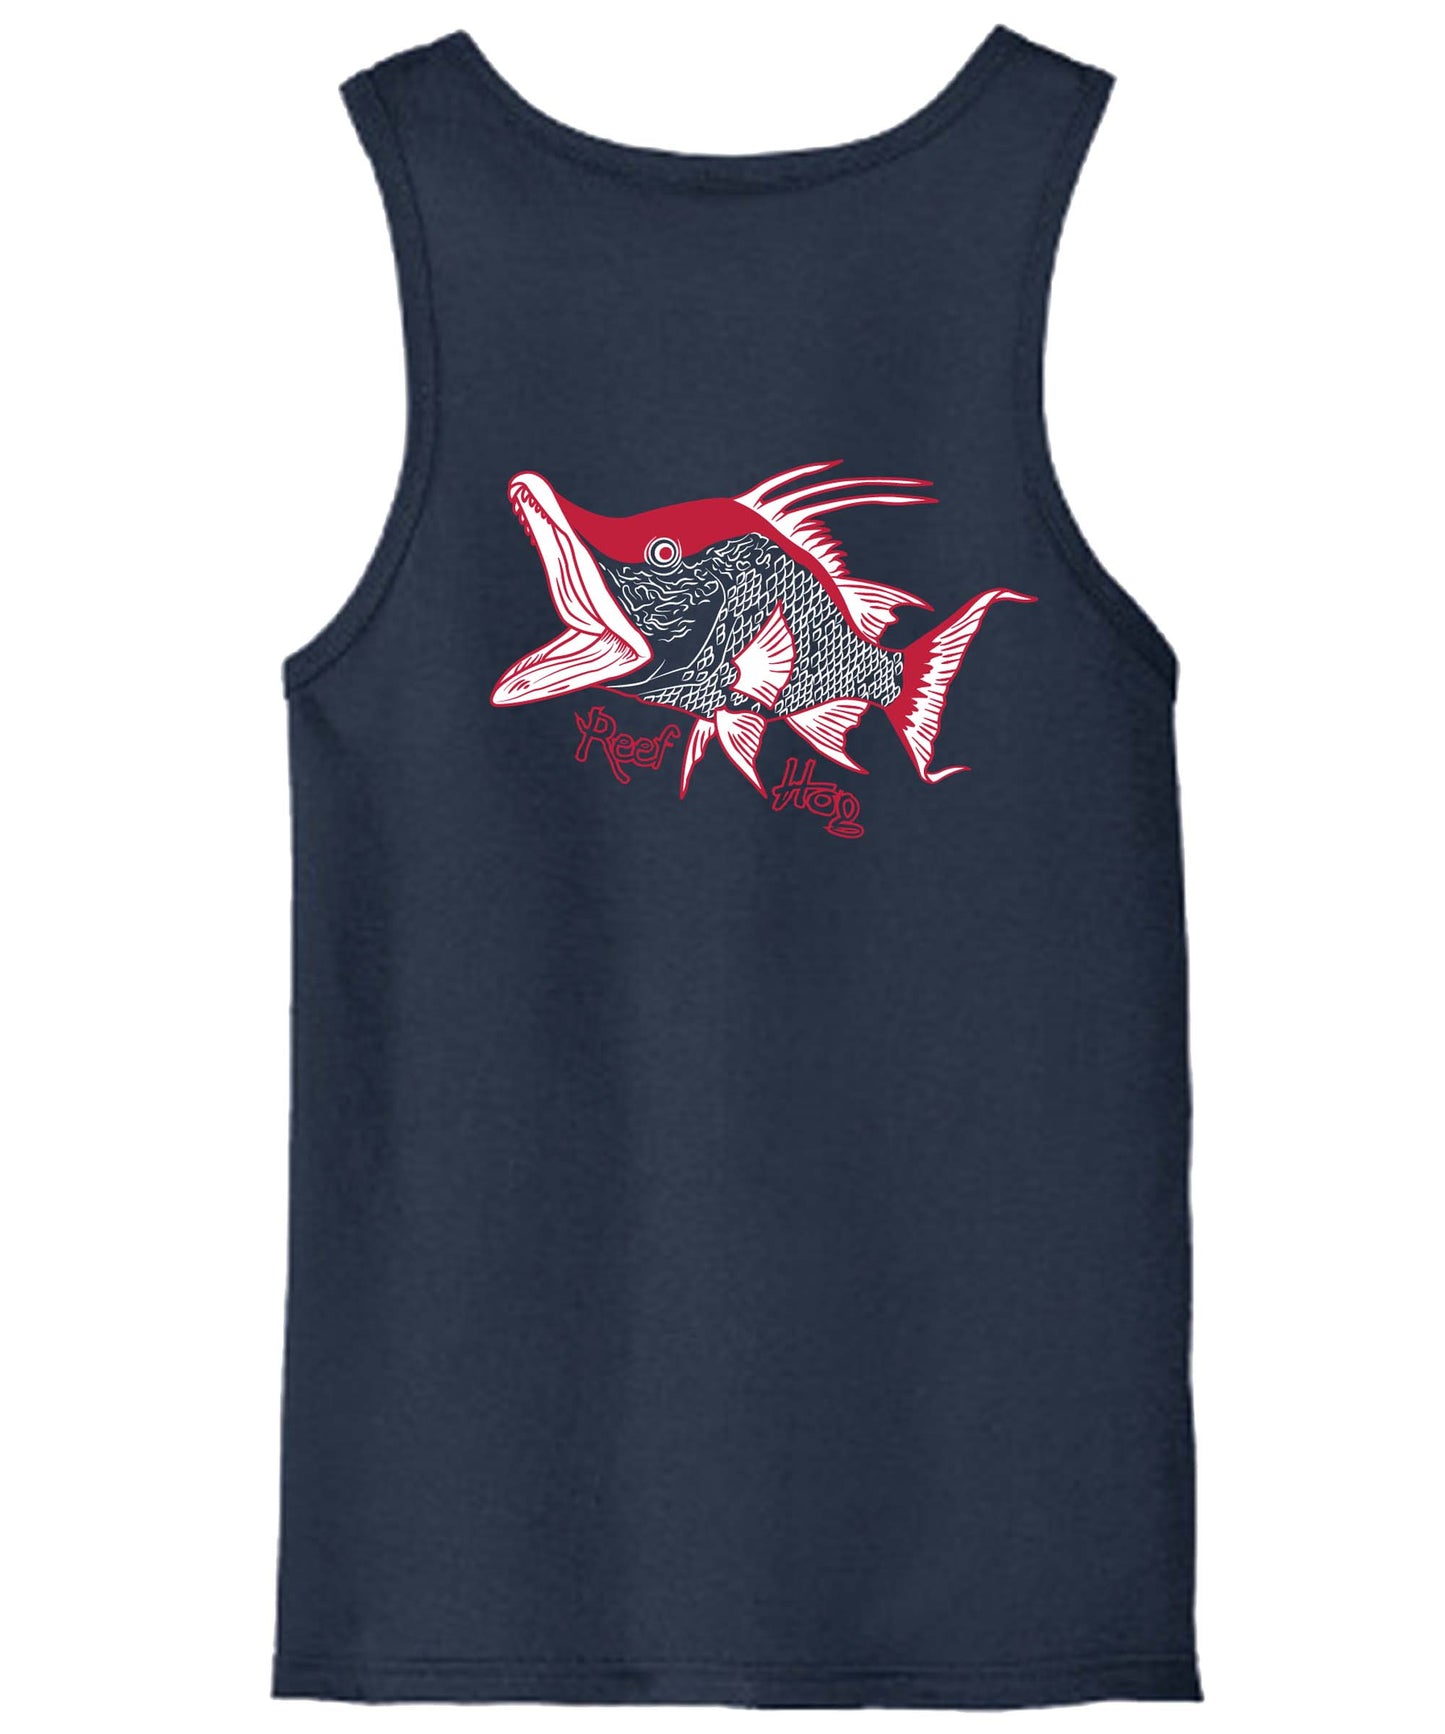 Hogfish "Reef Hog" Cotton Crew T-shirt & Tank Tops